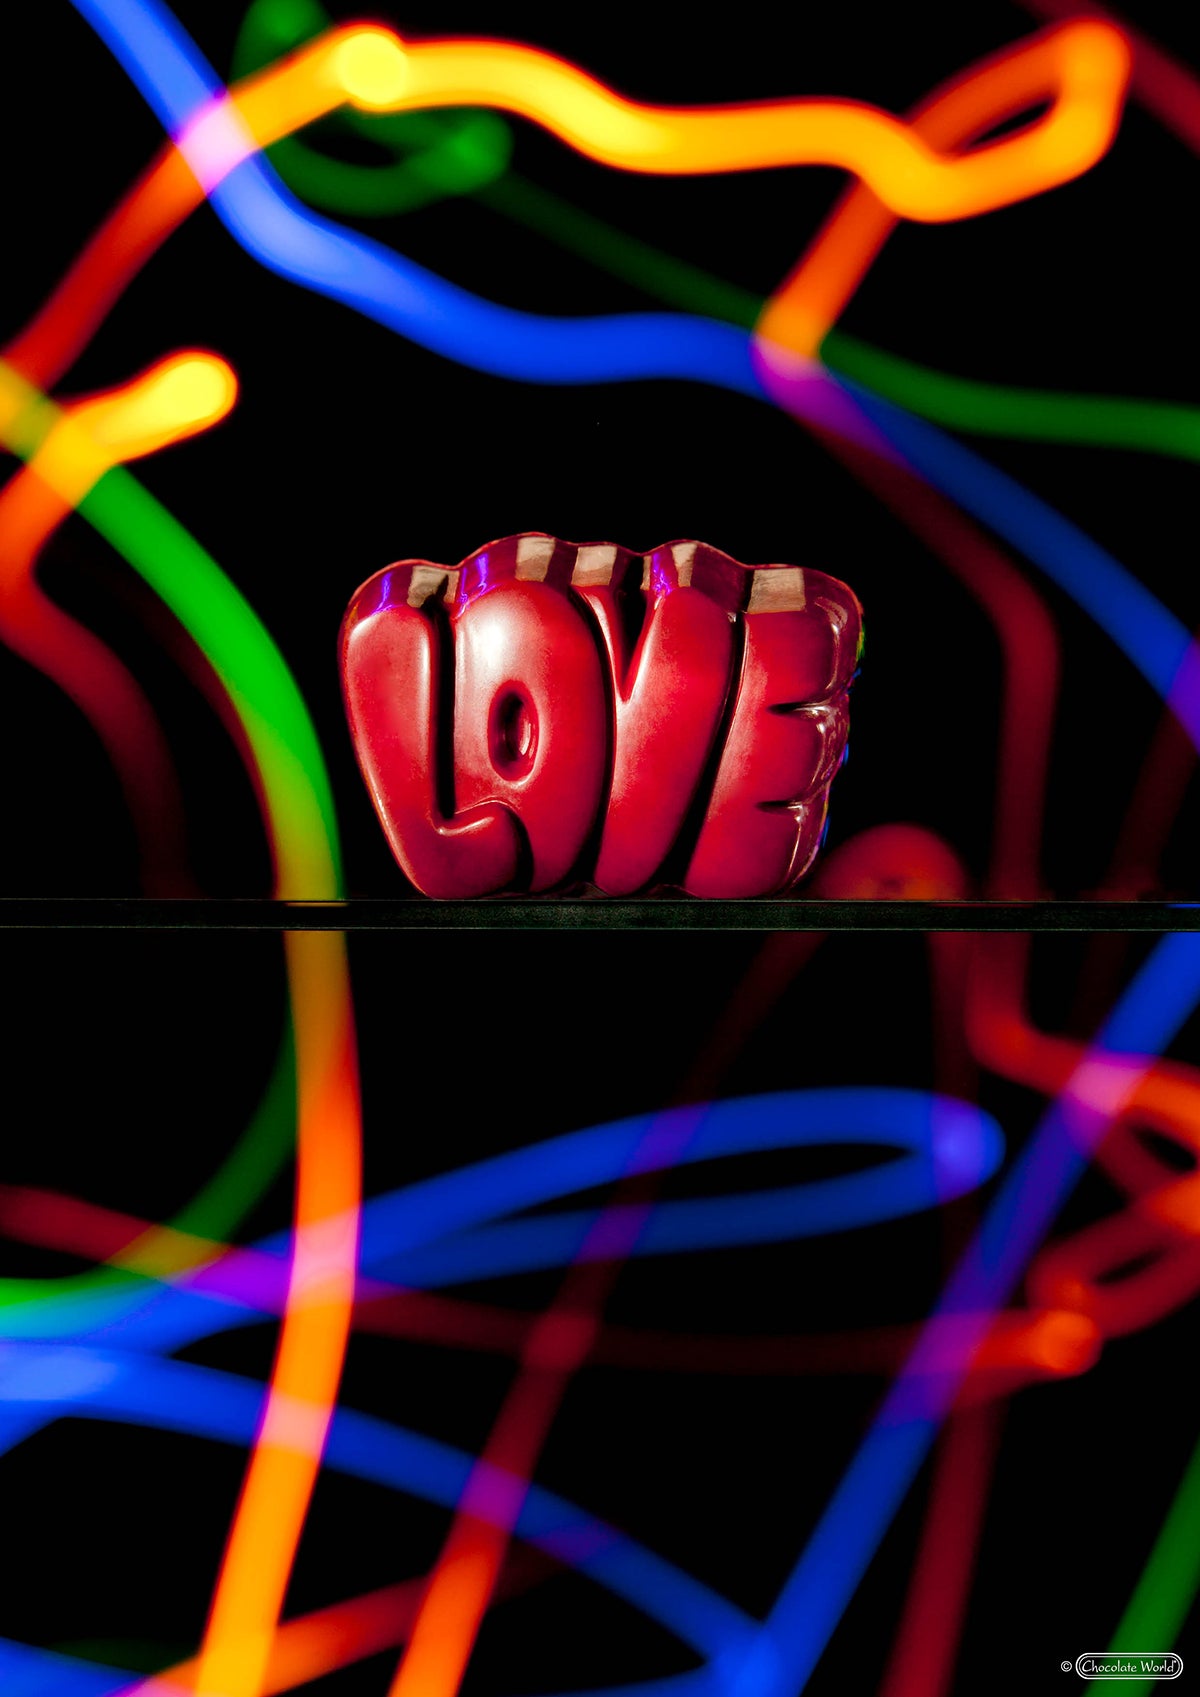 CHOCOLATE MOLD "LOVE" PRALINE CW1744 - Zucchero Canada